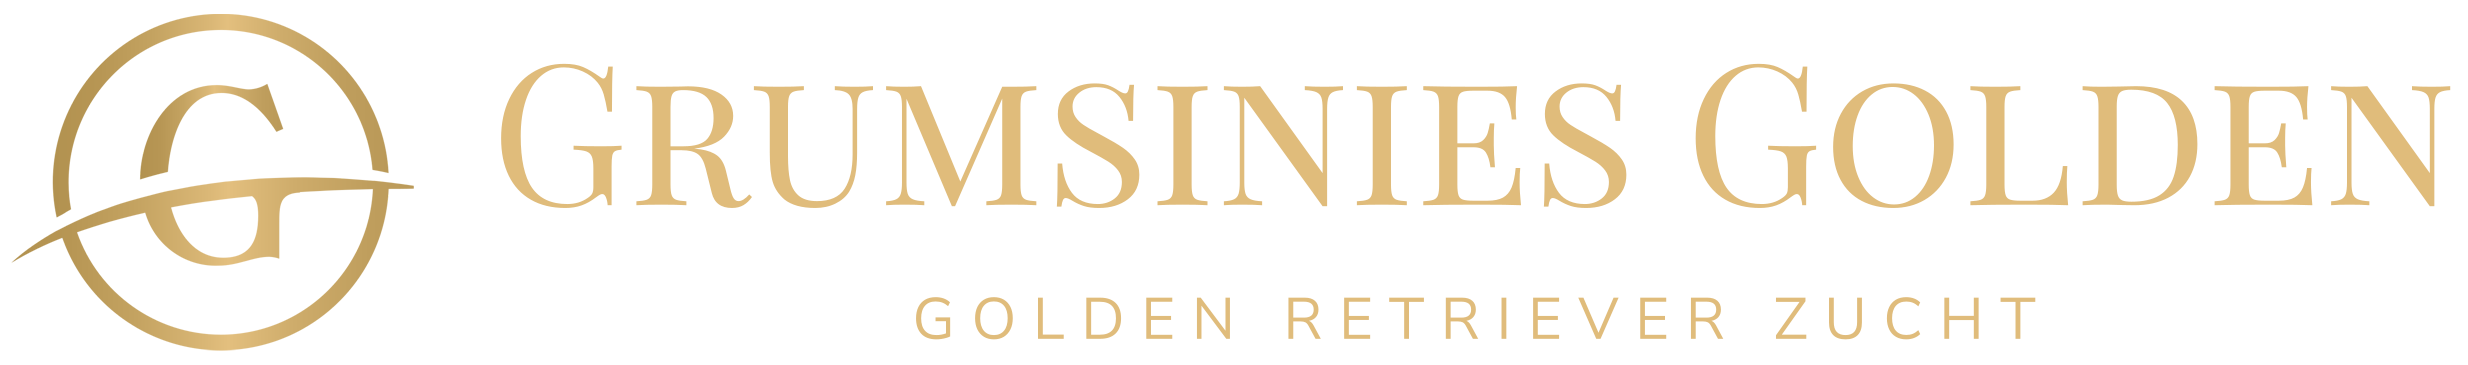 Logo Golden Grumsinies